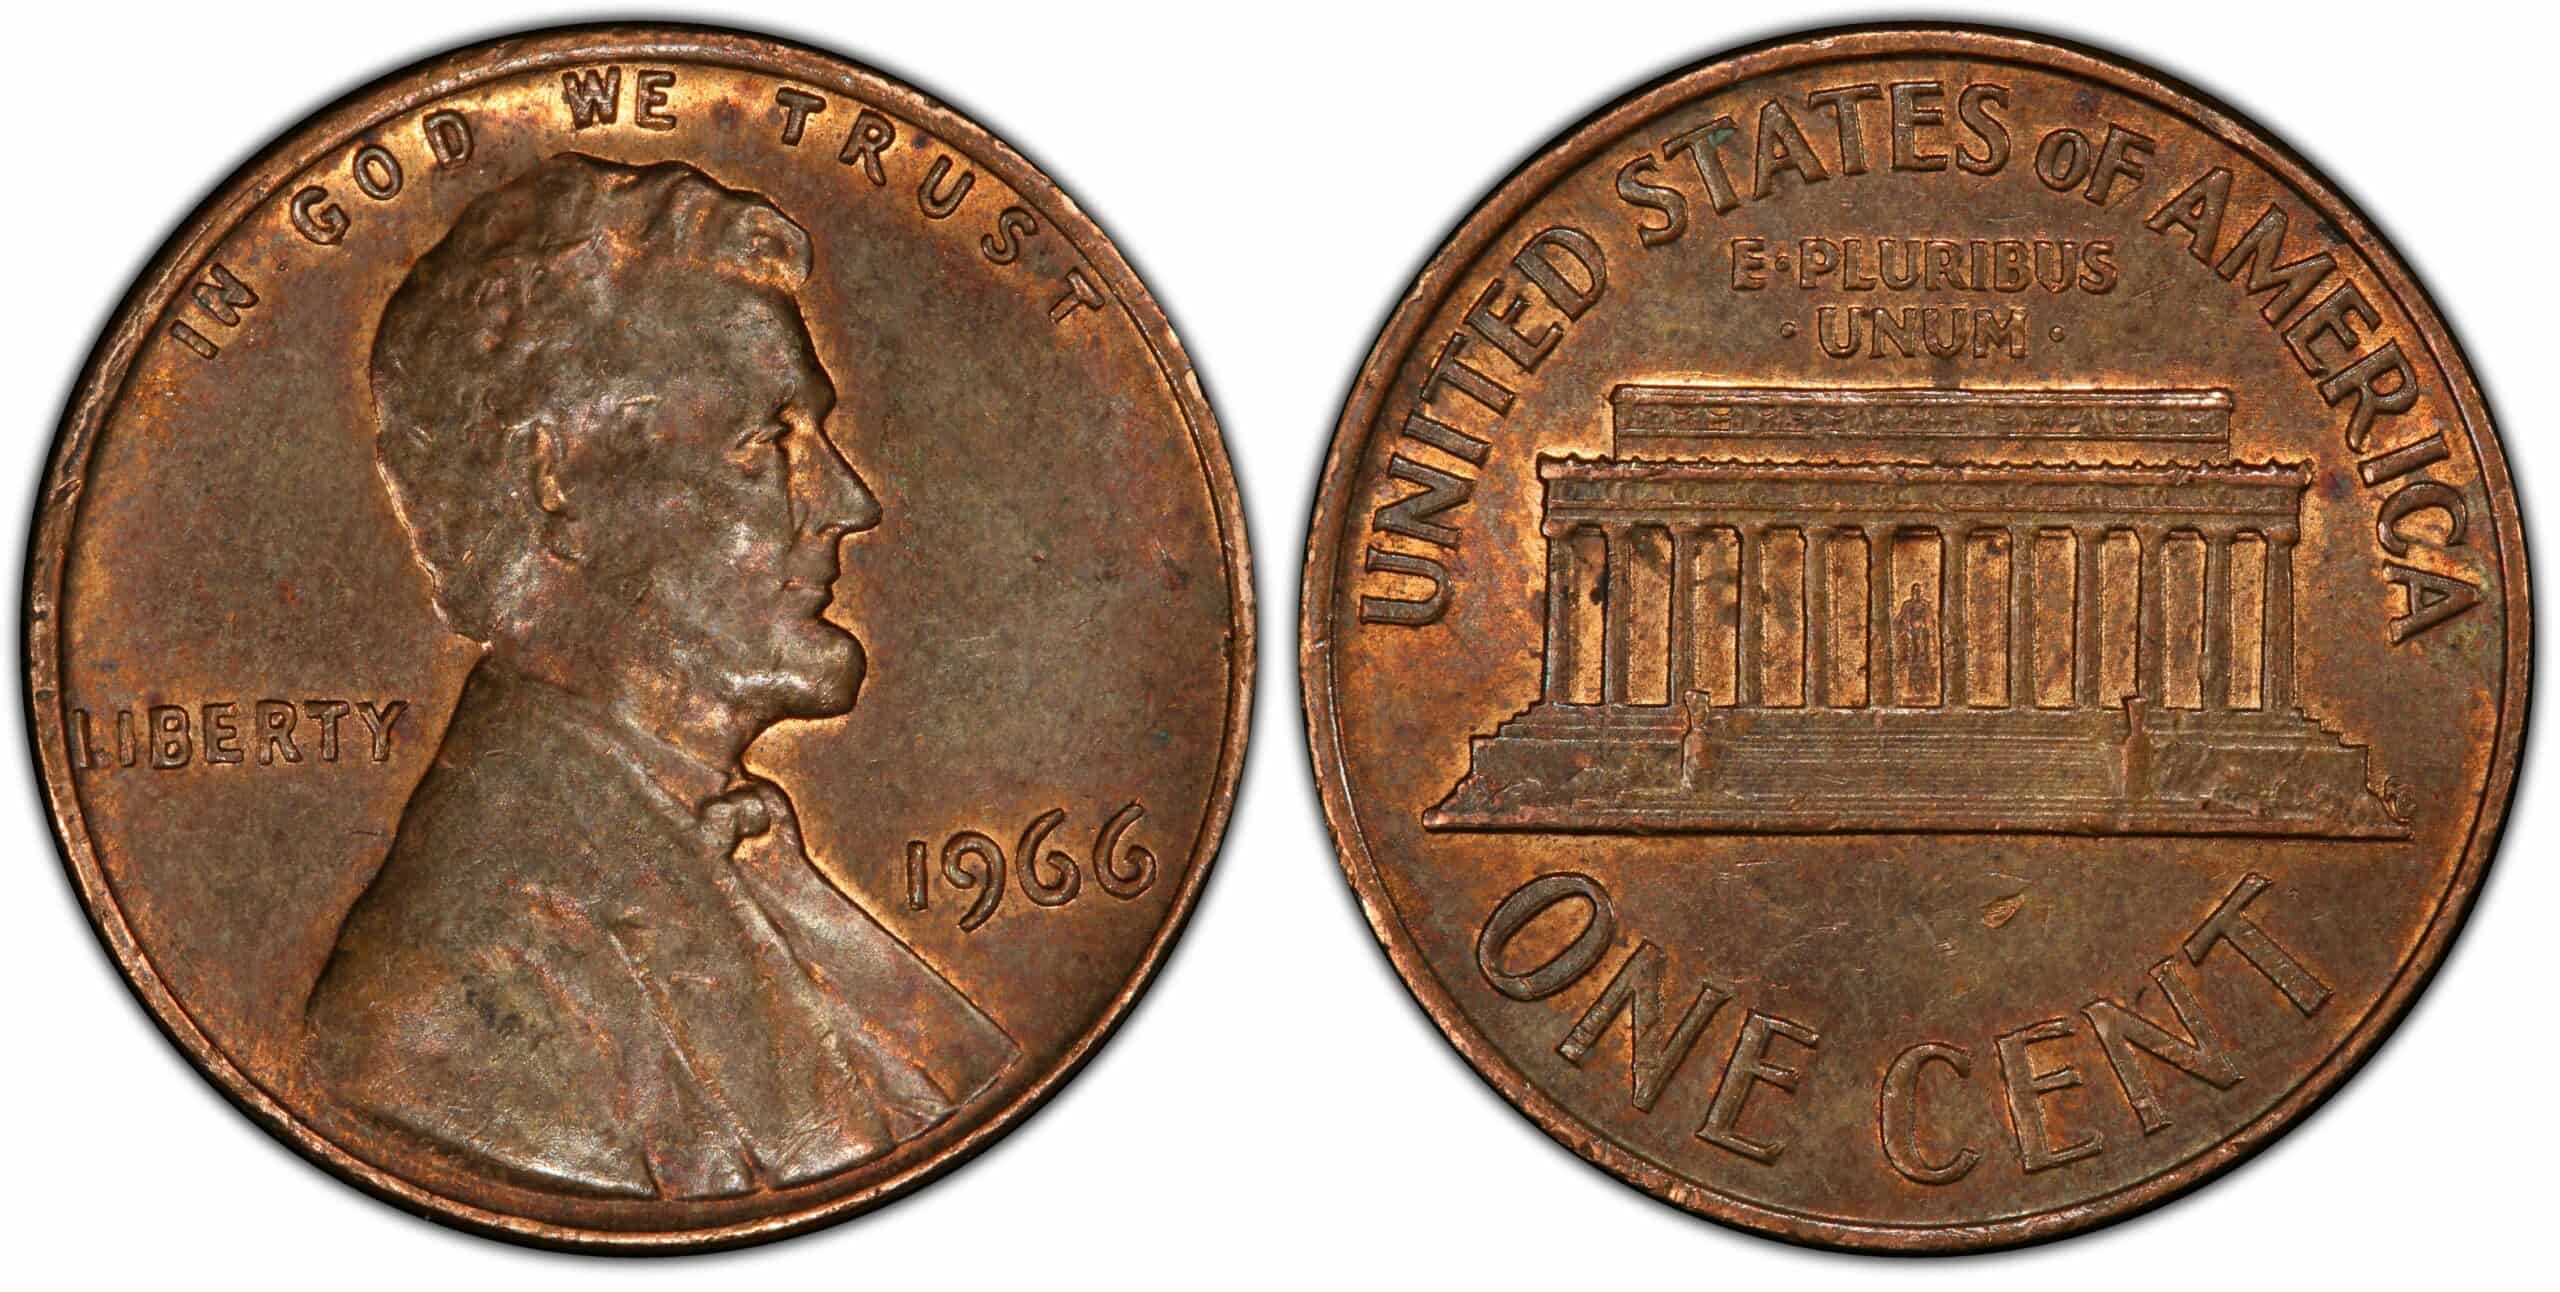 1966 BN Penny Value